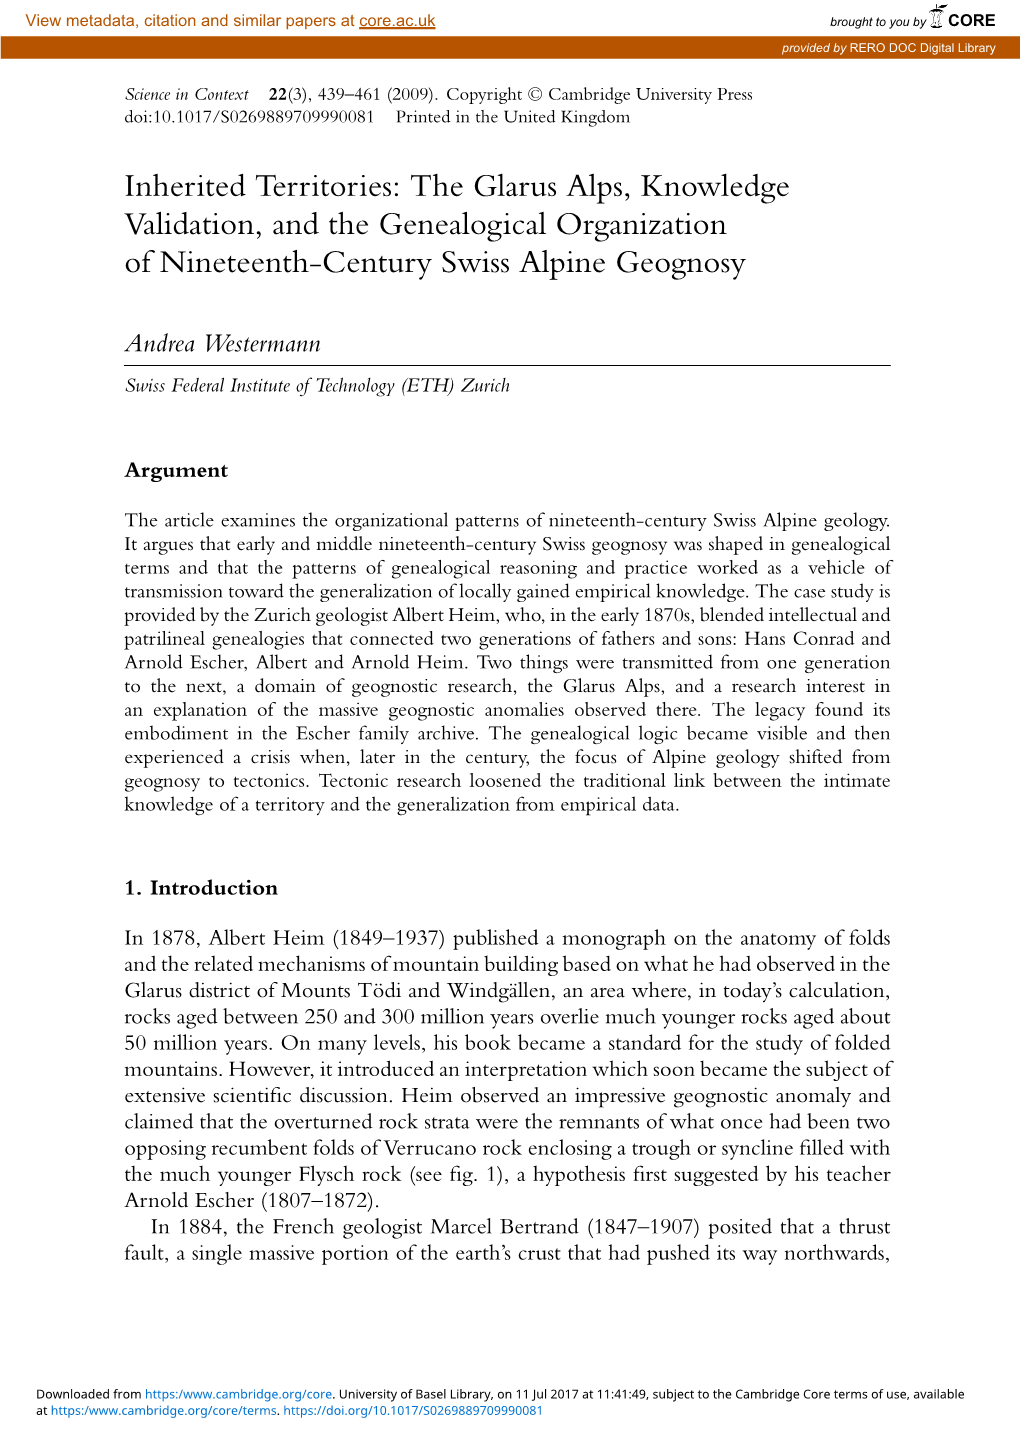 The Glarus Alps, Knowledge Validation, and the Genealogical Organization of Nineteenth-Century Swiss Alpine Geognosy